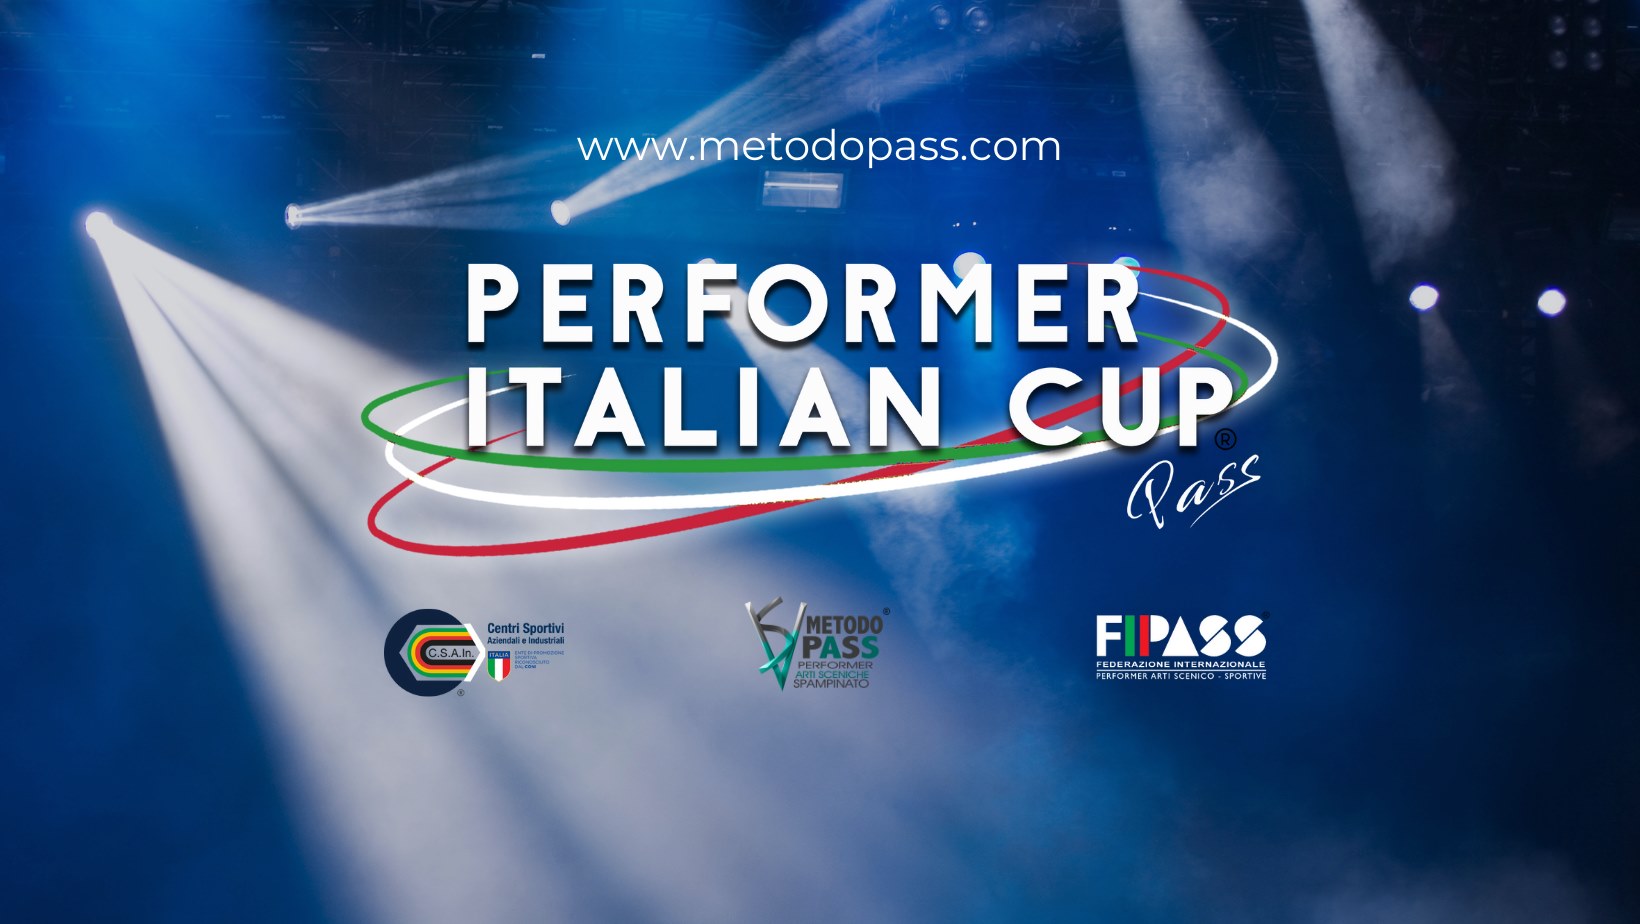 PERFORMER ITALIAN CUP